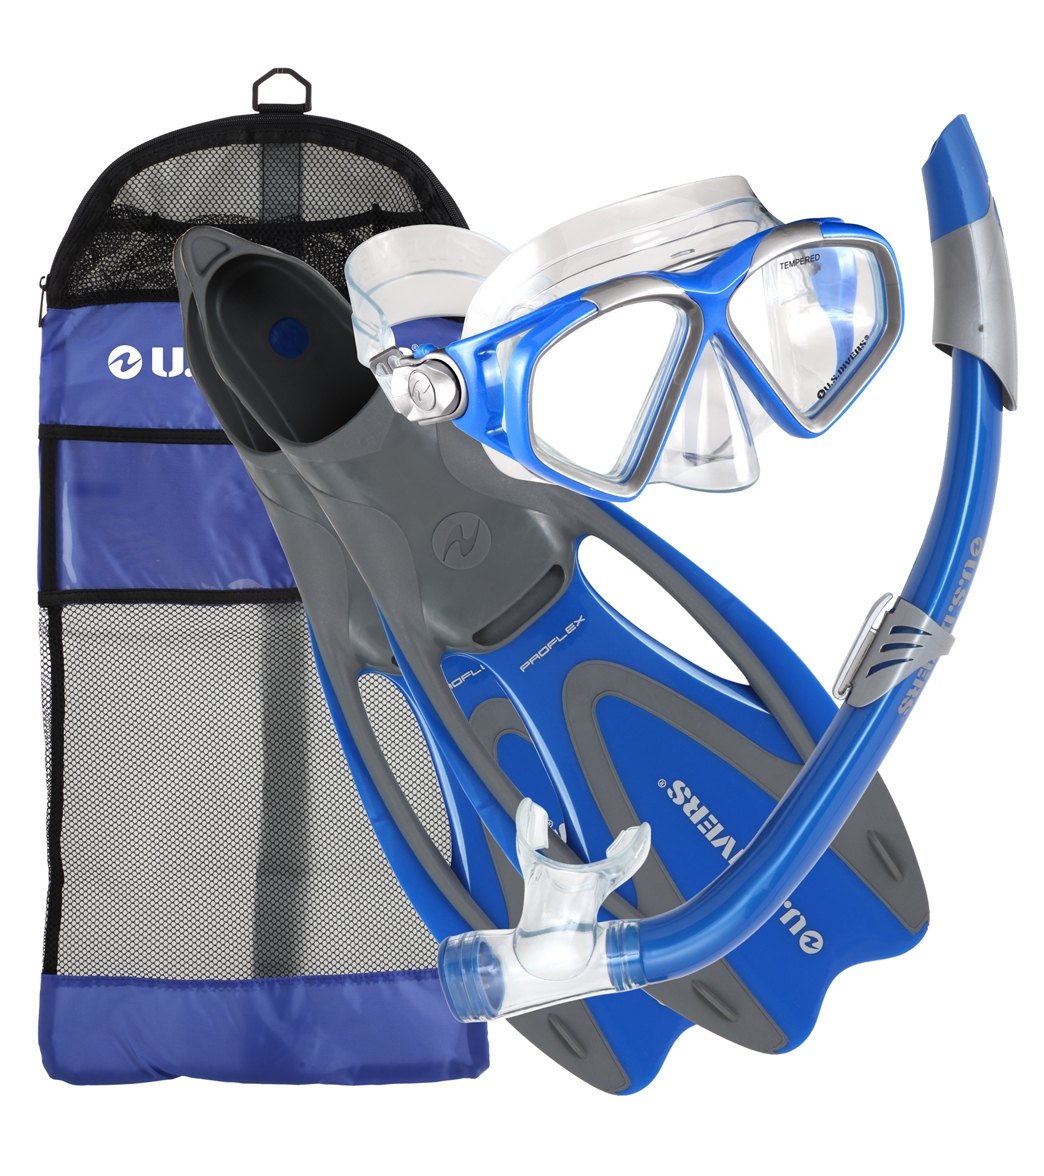 U.S. Divers Cozumel Mask Seabreeze Snorkel / Proflex Fins / Gear Set at SwimOutlet.com